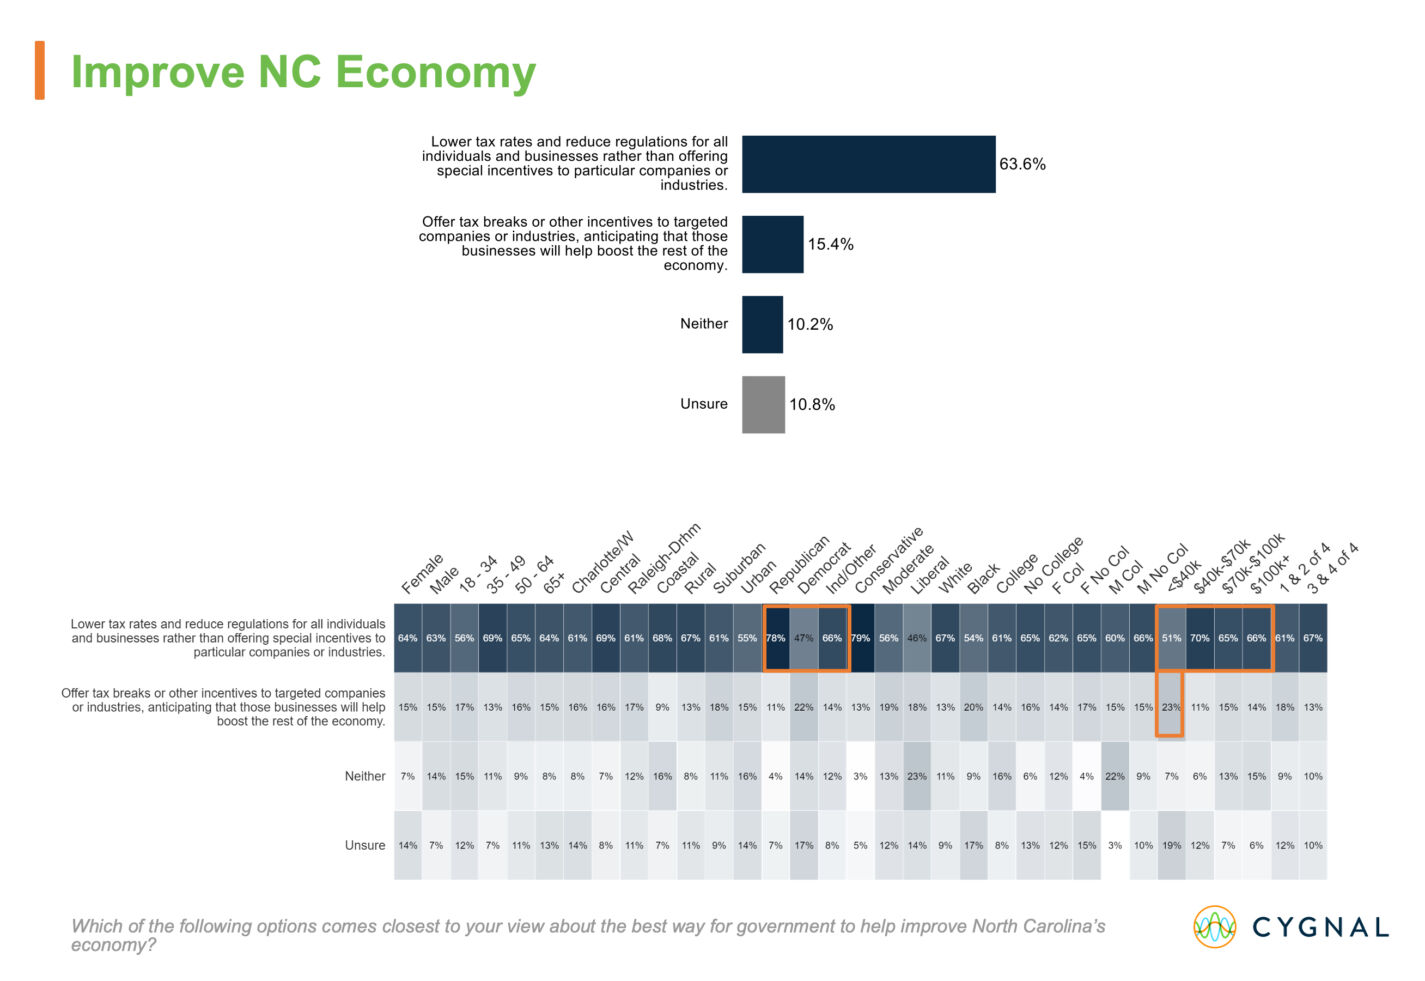 Carolina Journal Poll slide on improving the North Carolina economy